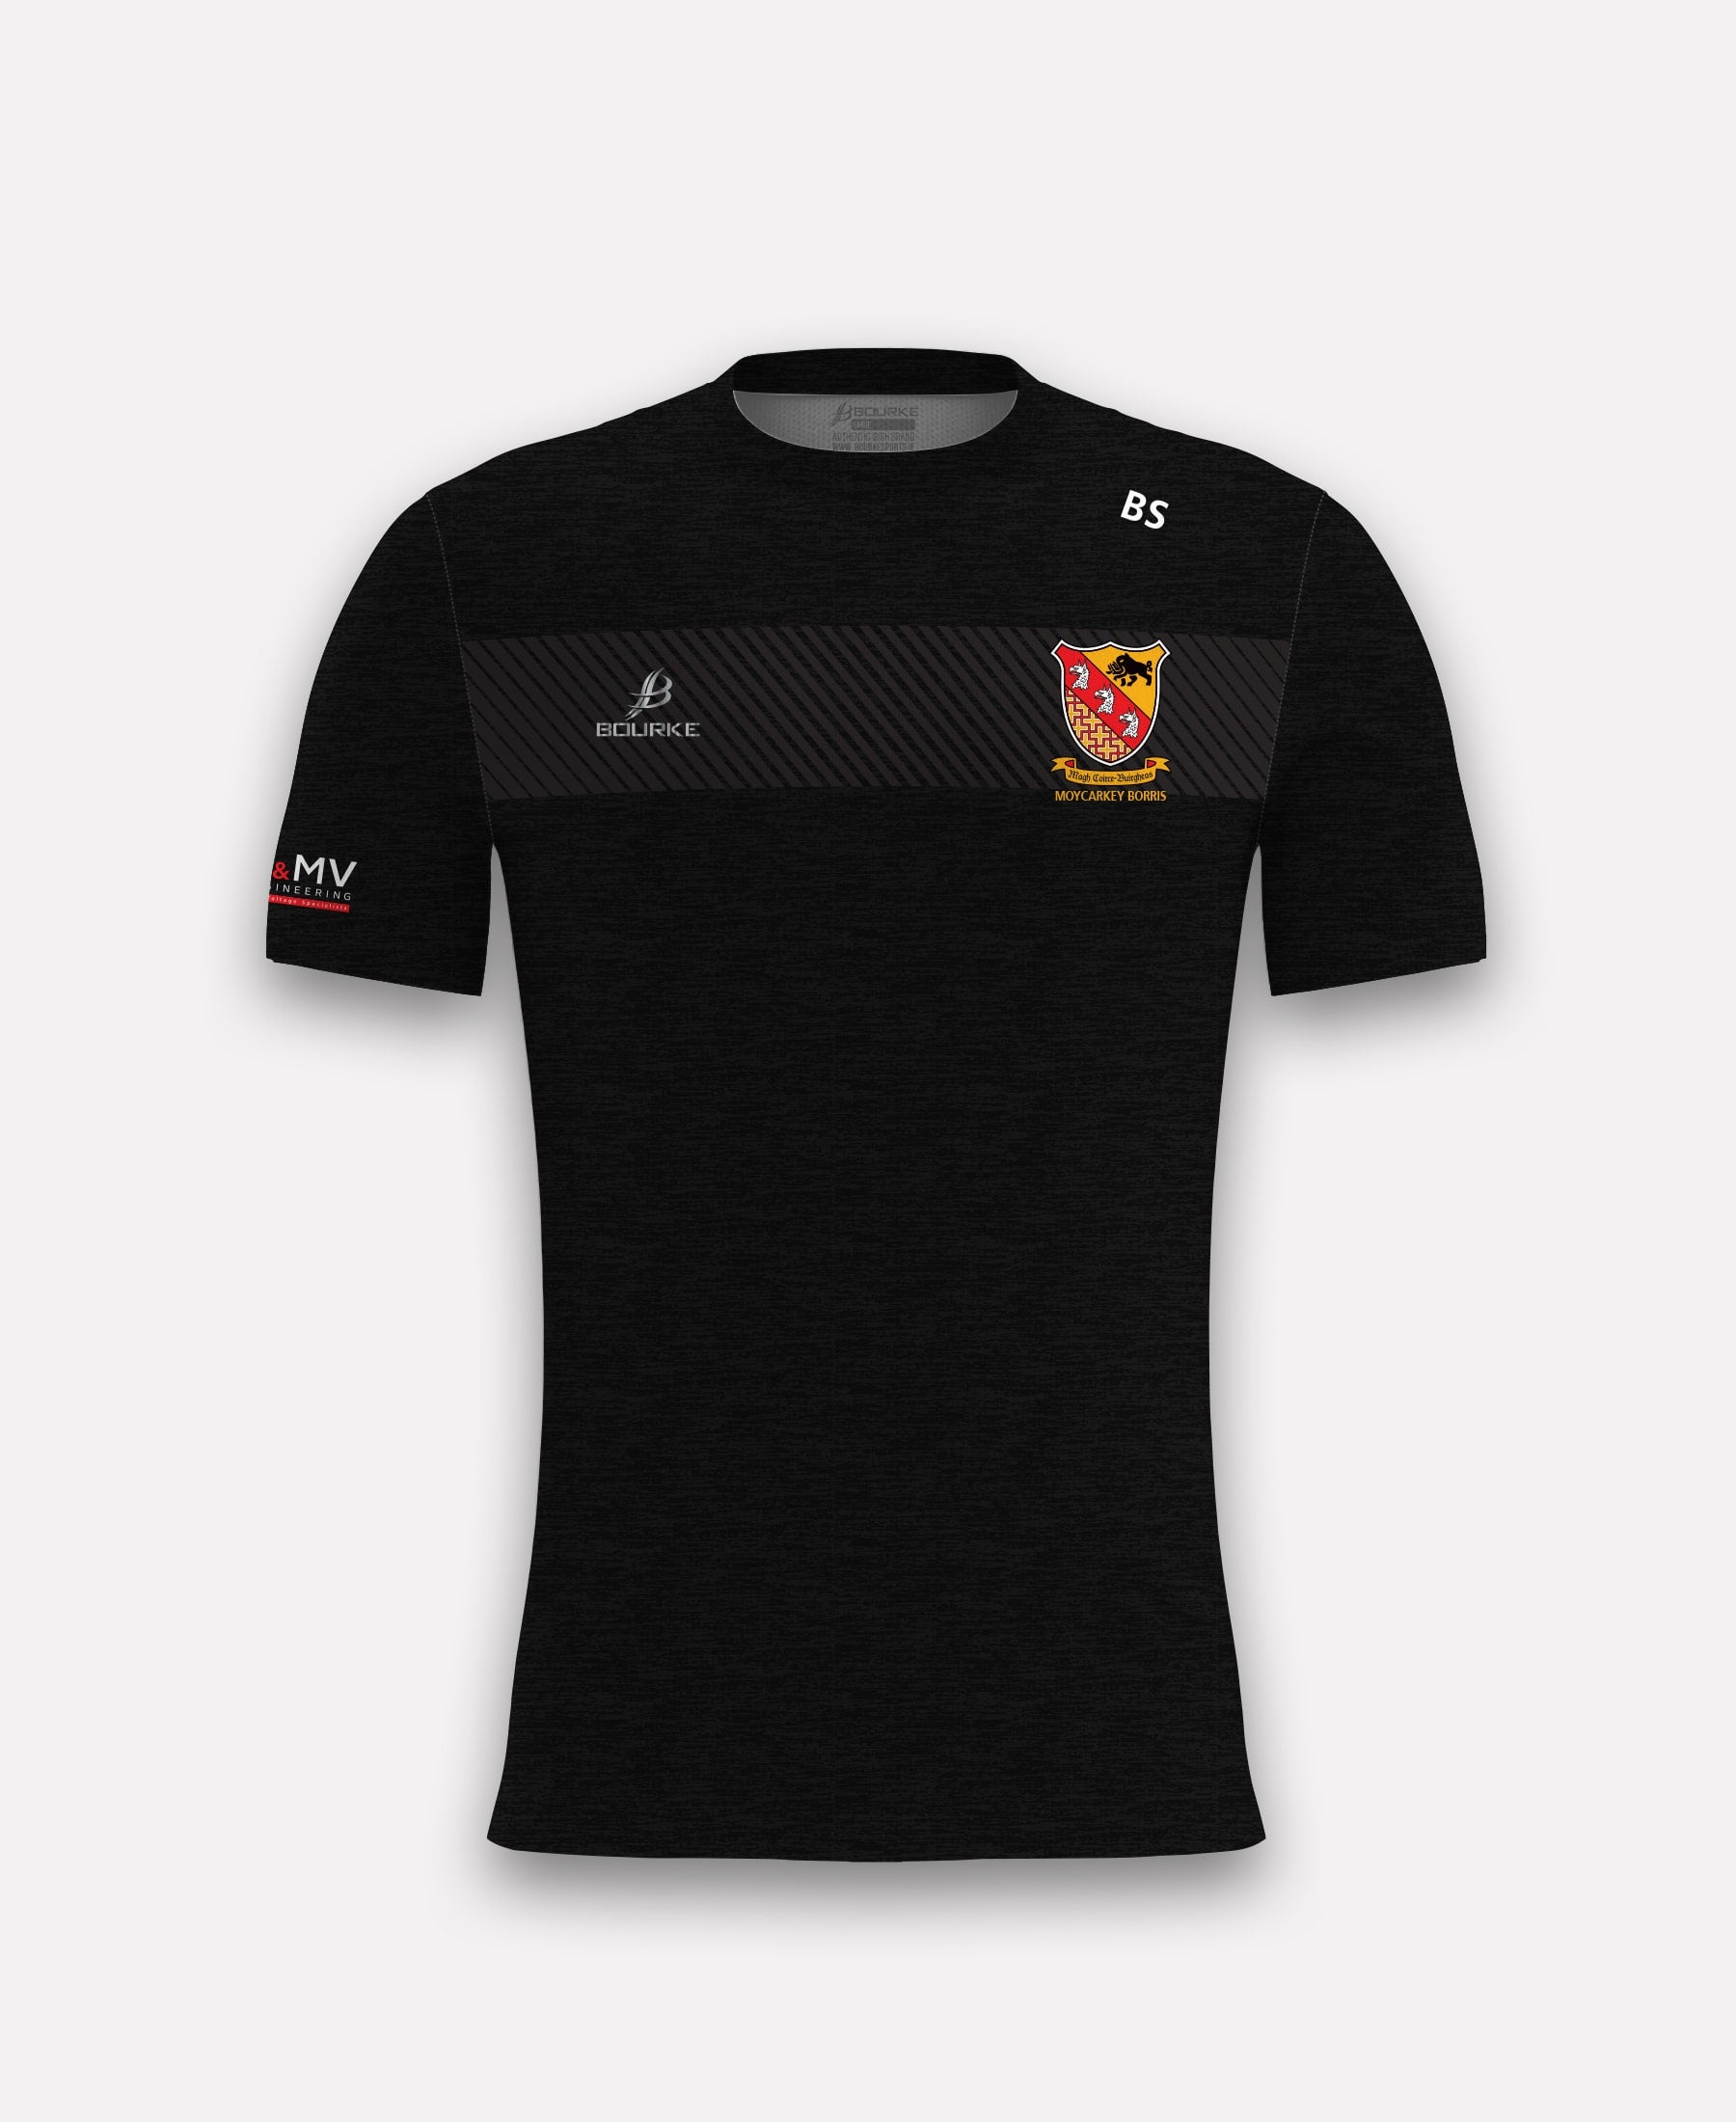 Moycarkey Borris GAA TACA T-Shirt (Black)